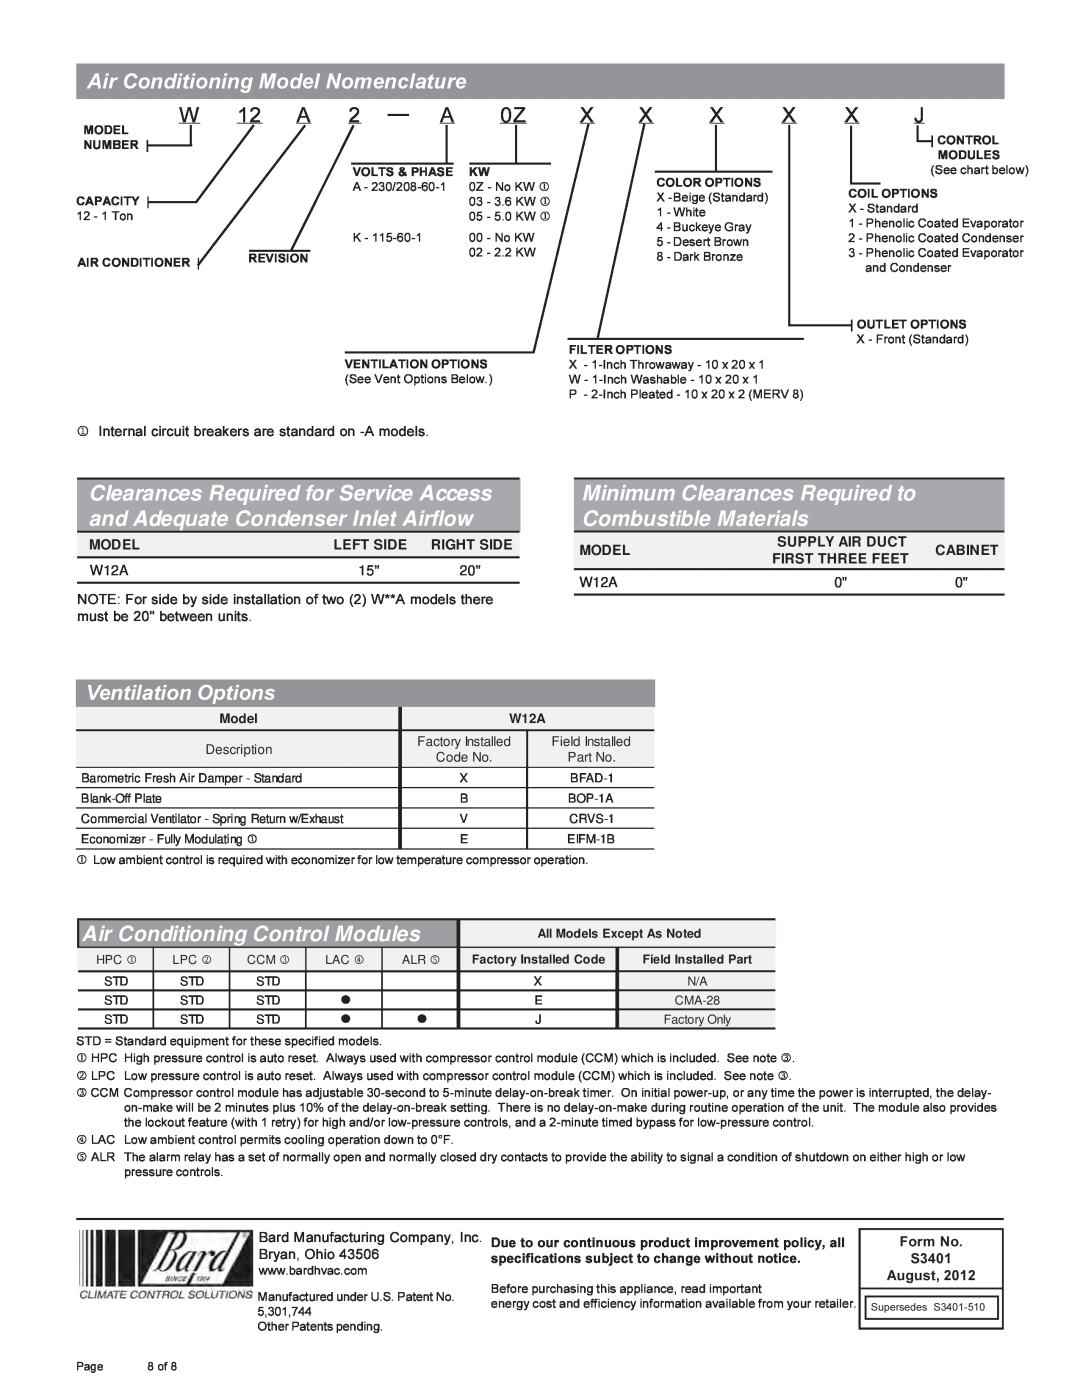 Bard W12A manual Air Conditioning Model Nomenclature, W 12 A, A 0Z, X X X X X J, Ventilation Options 